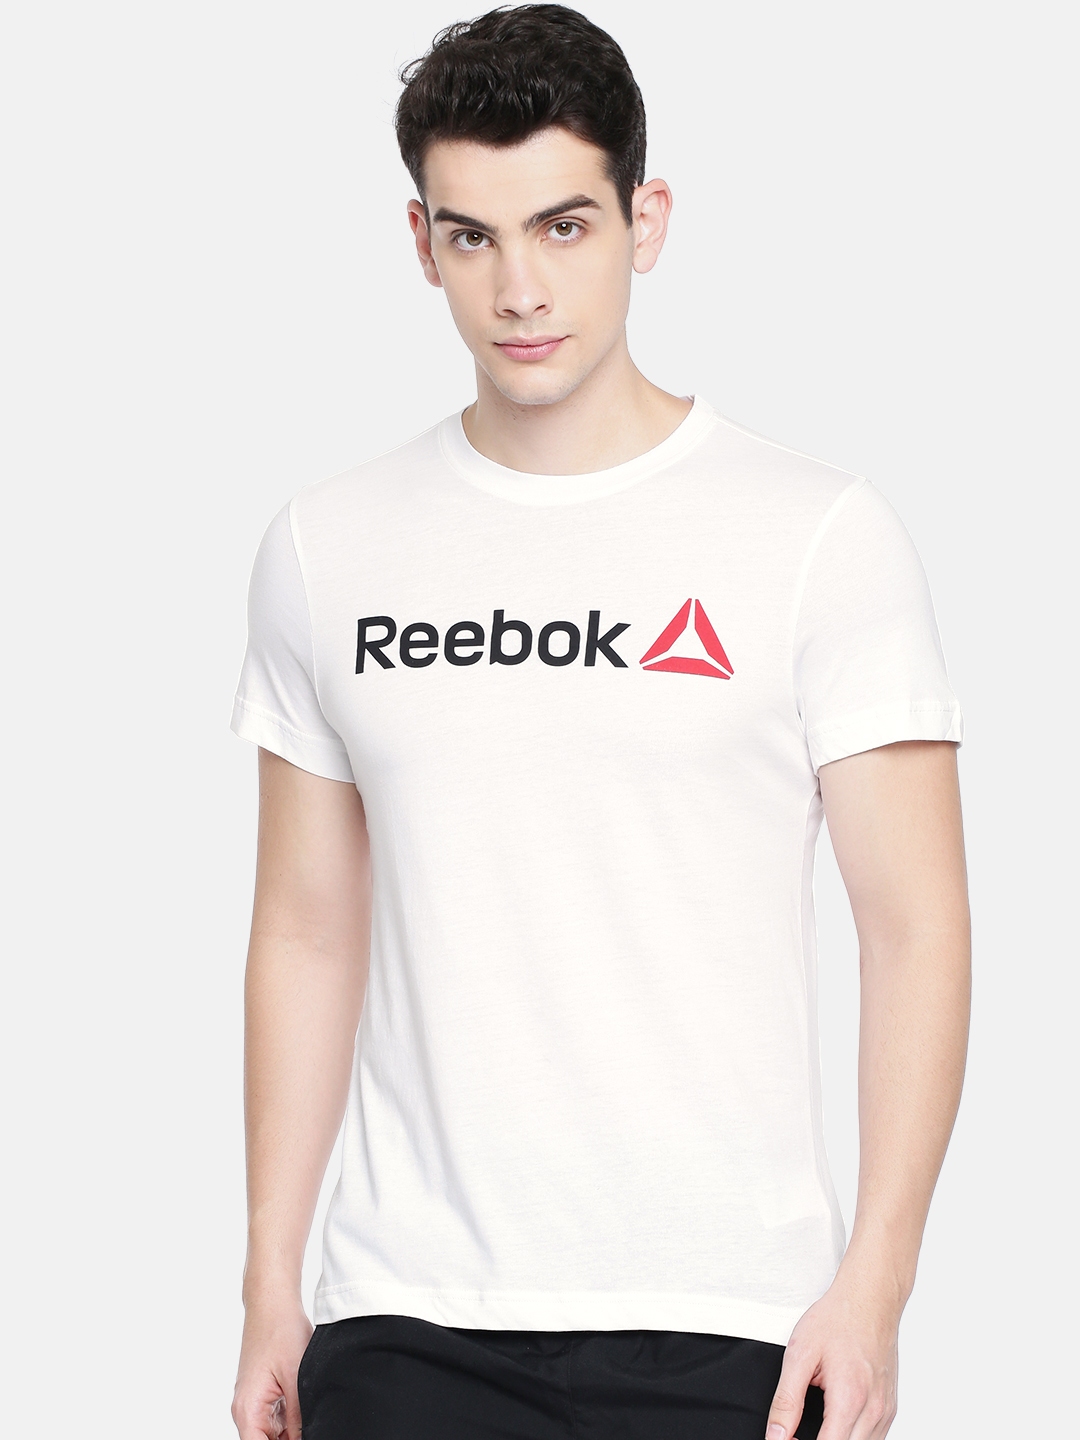 reebok t shirt white Online Shopping for Women, Men, Kids Fashion \u0026  Lifestyle|Free Delivery \u0026 Returns